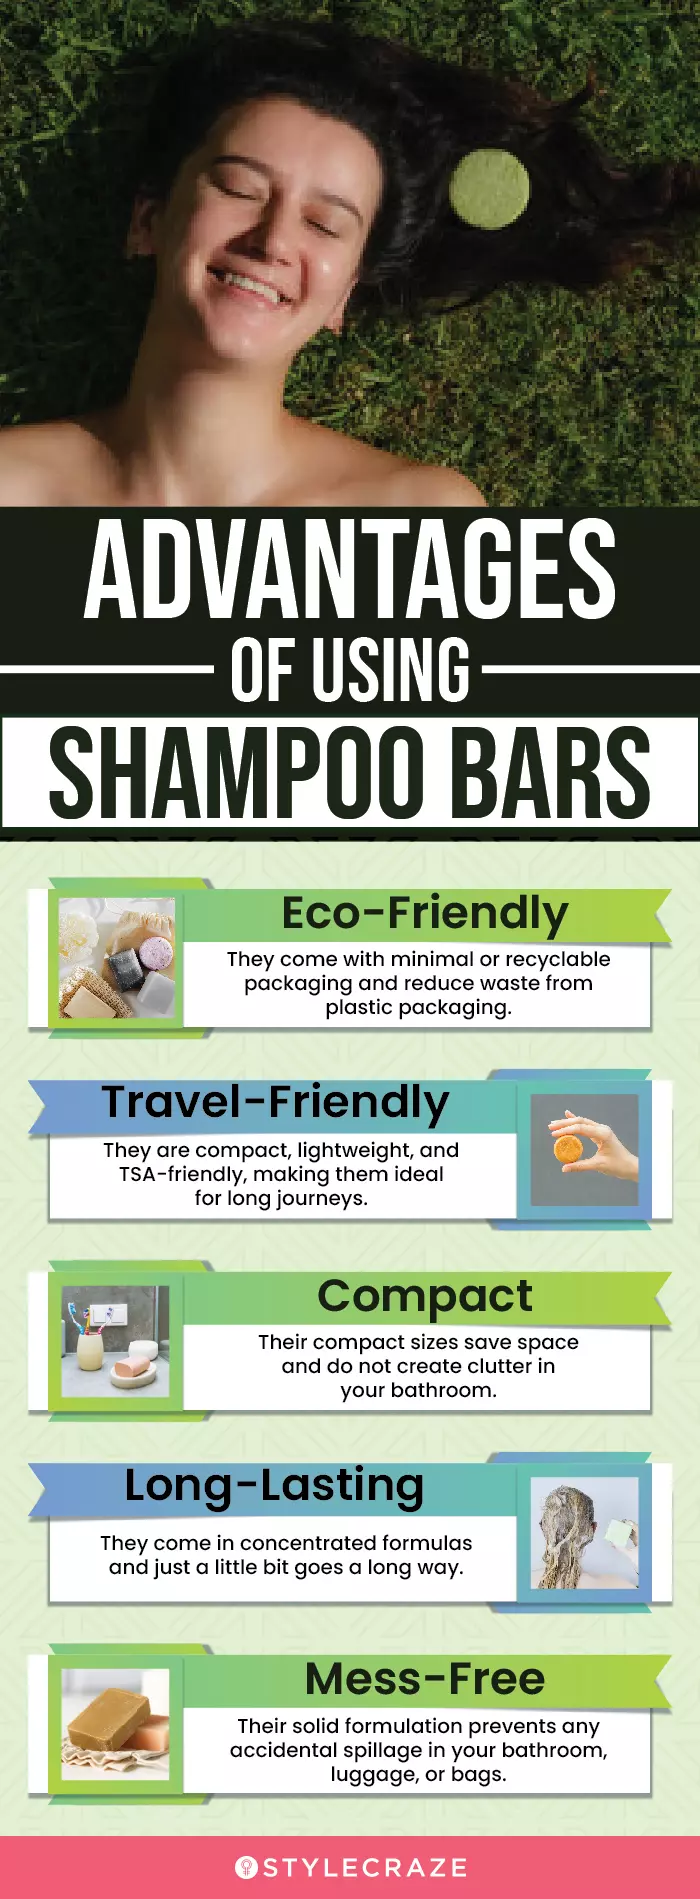 Advantages Of Shampoo Bars (infographic)